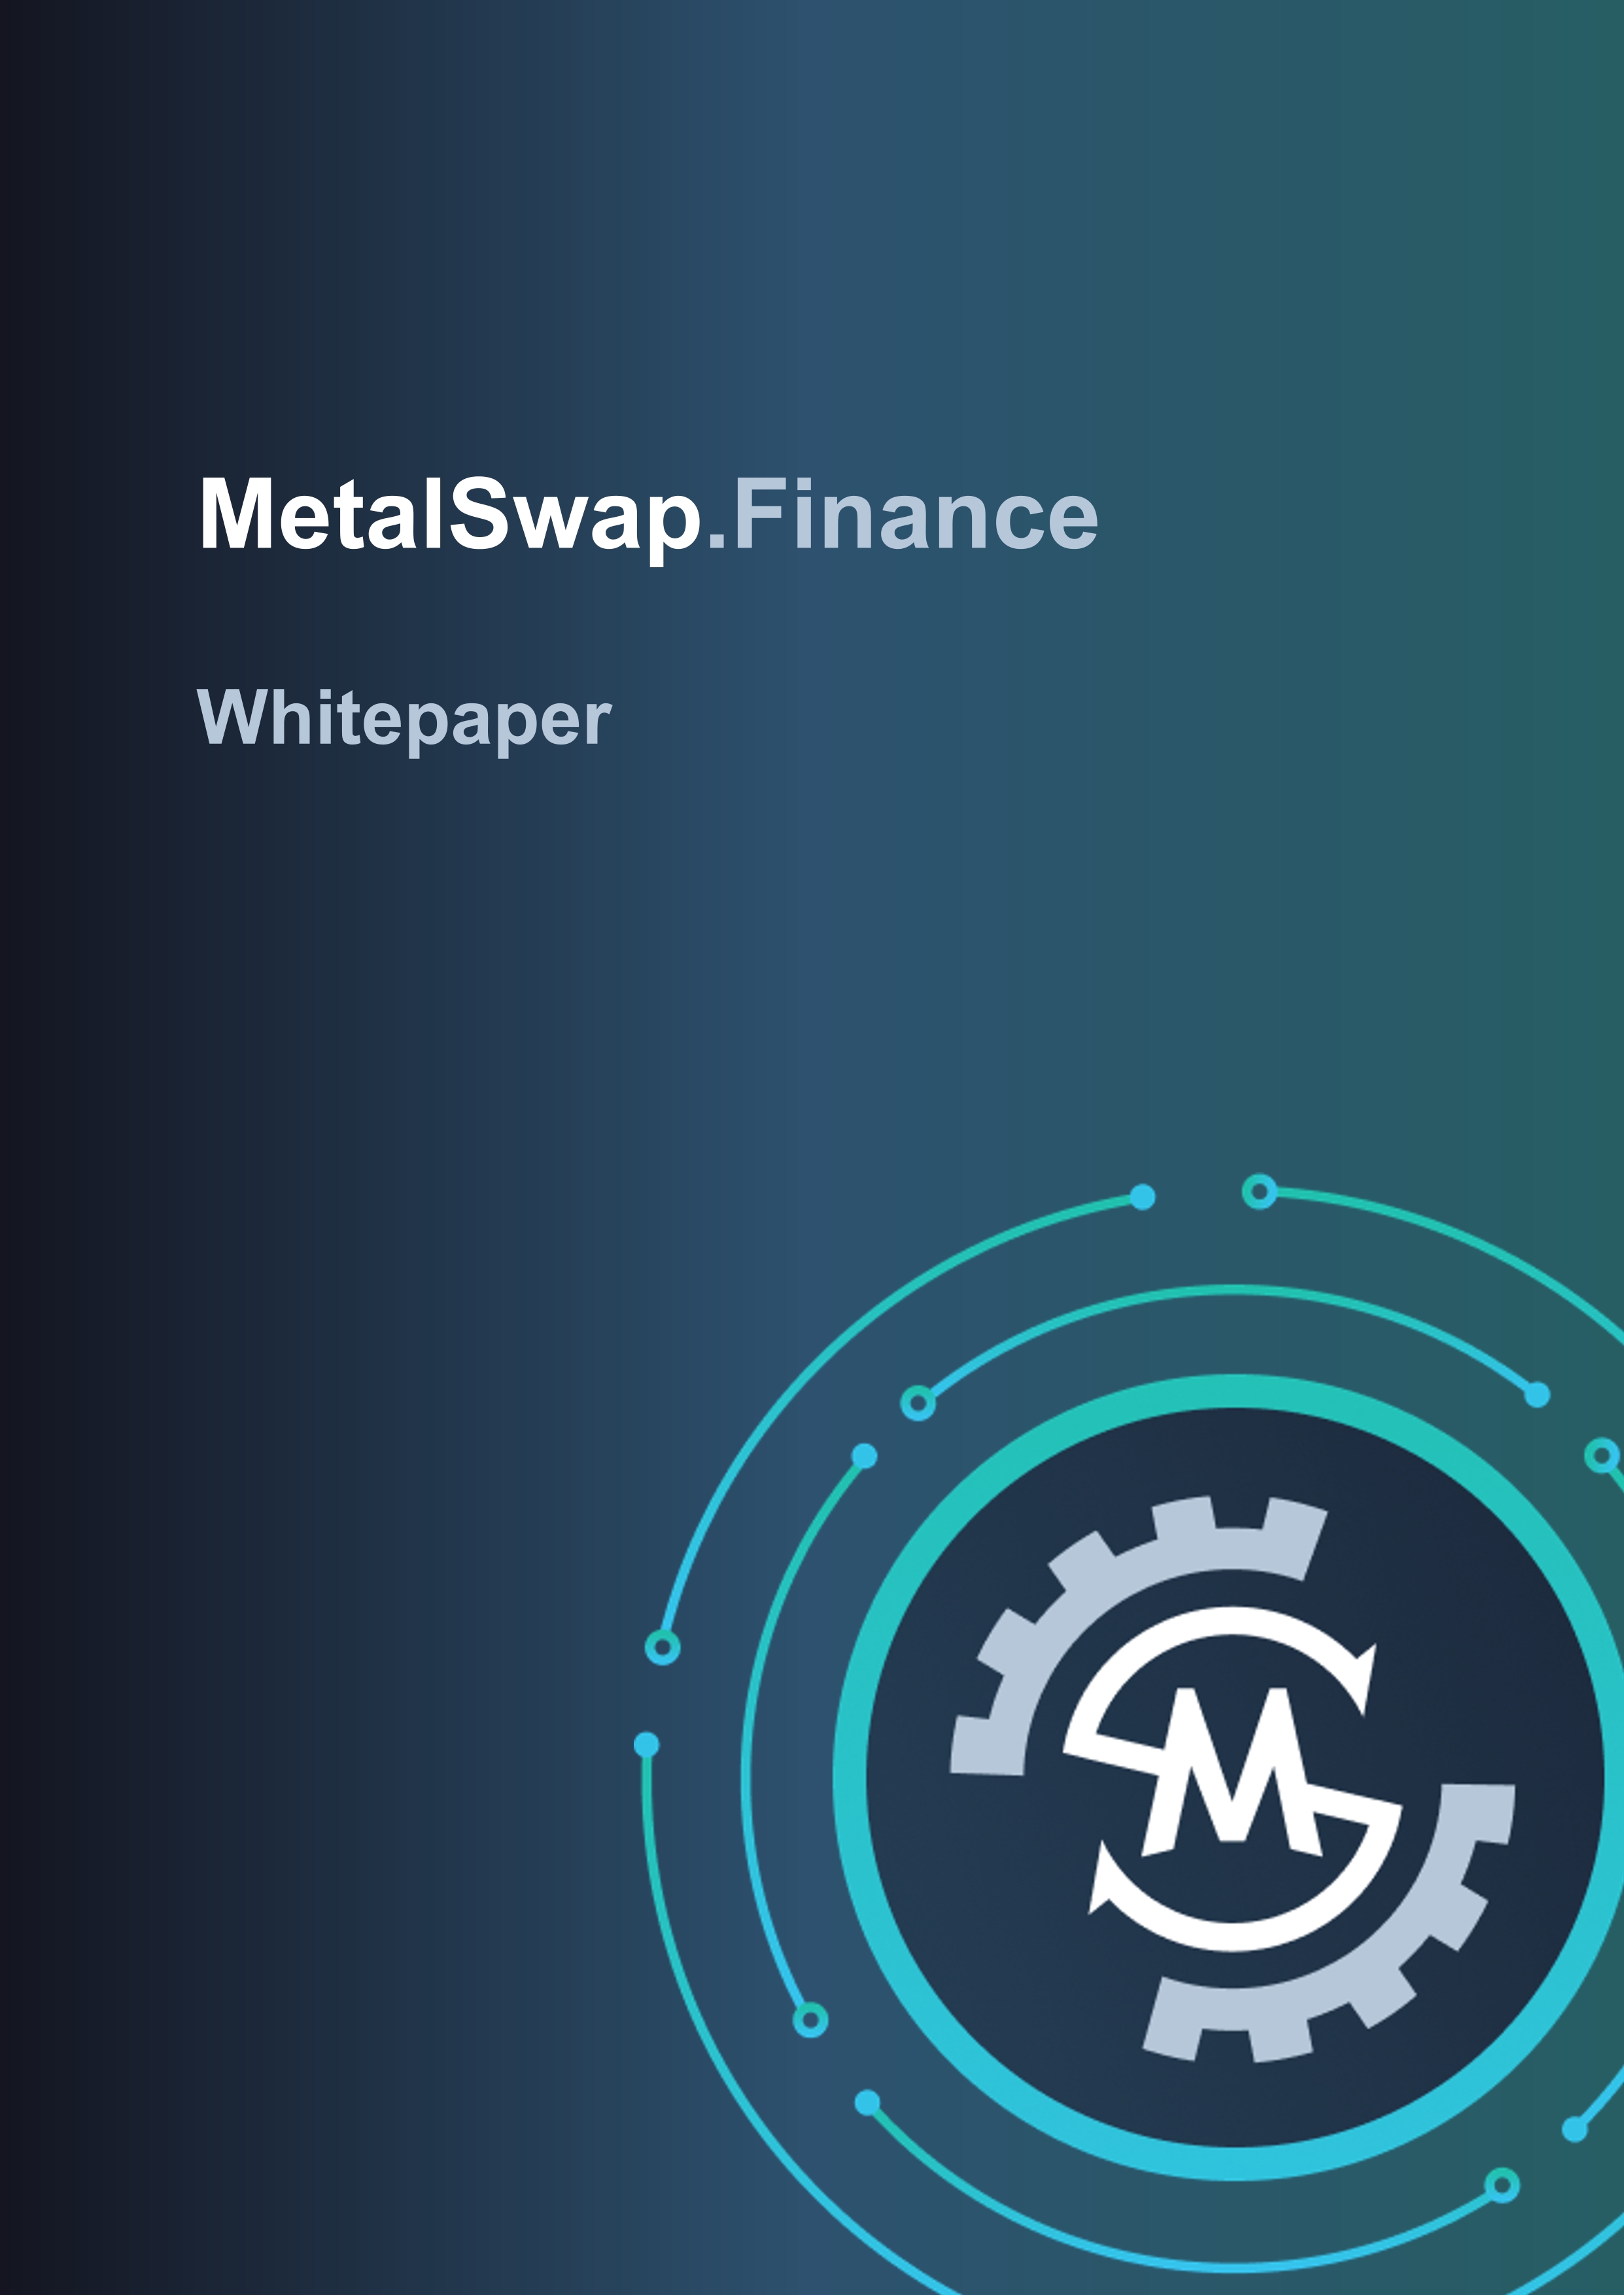 metalswap whitepaper img